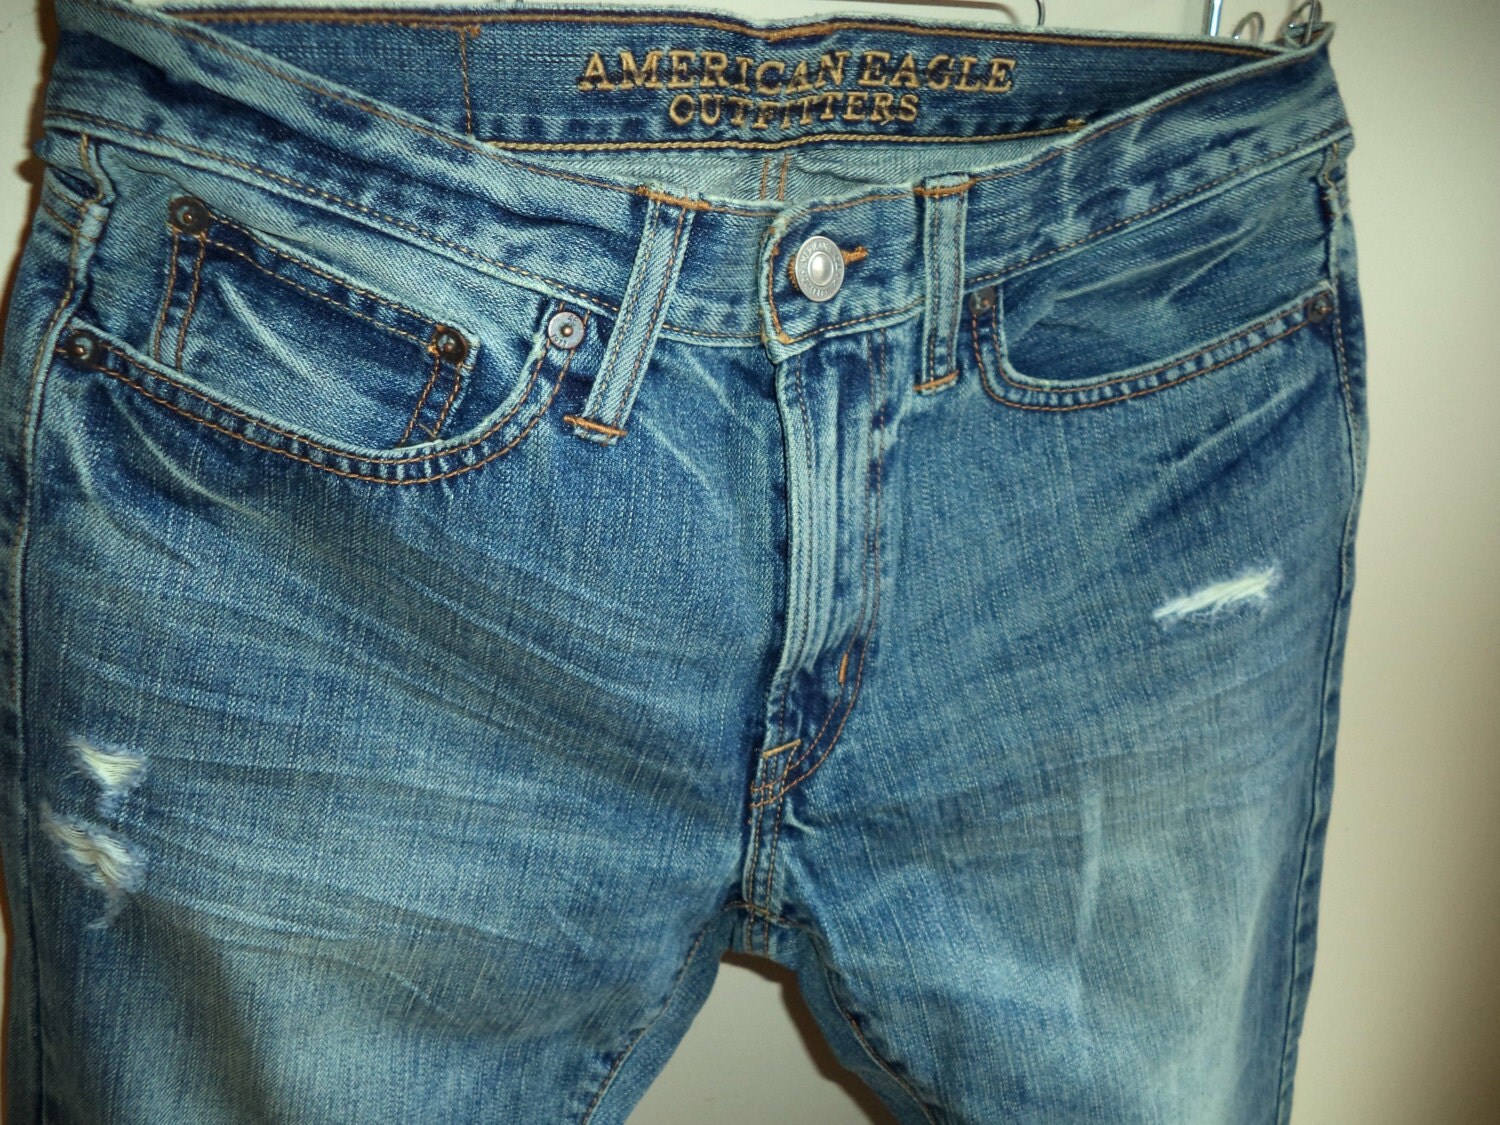 SALE 32 x 30 Men's American Eagle Jeans UNWORN